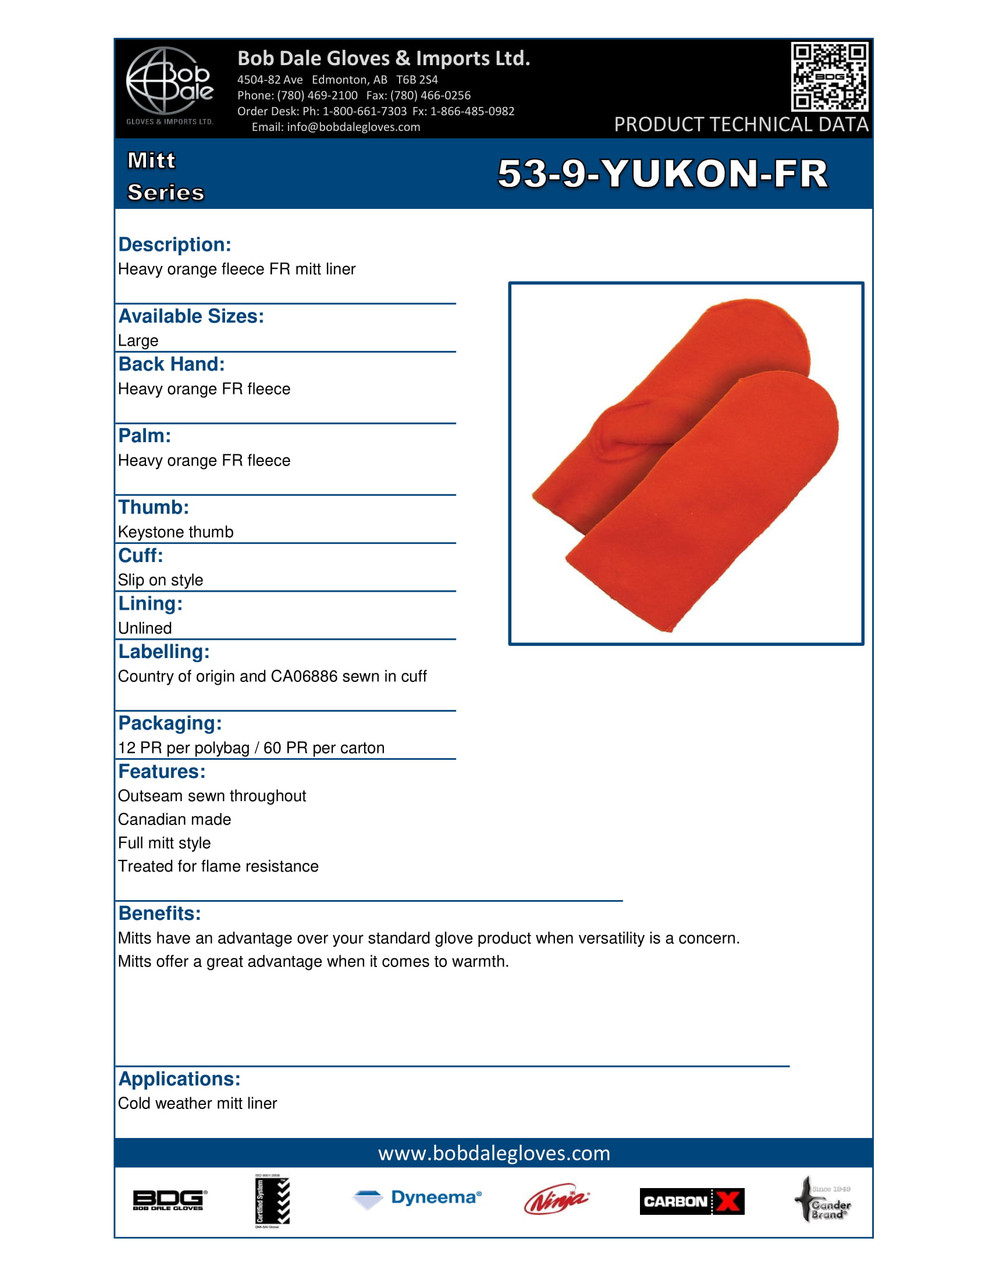 Nomex® FR Fleece Mitt Liner Hi-Viz Orange  53-9-YUKON-FR